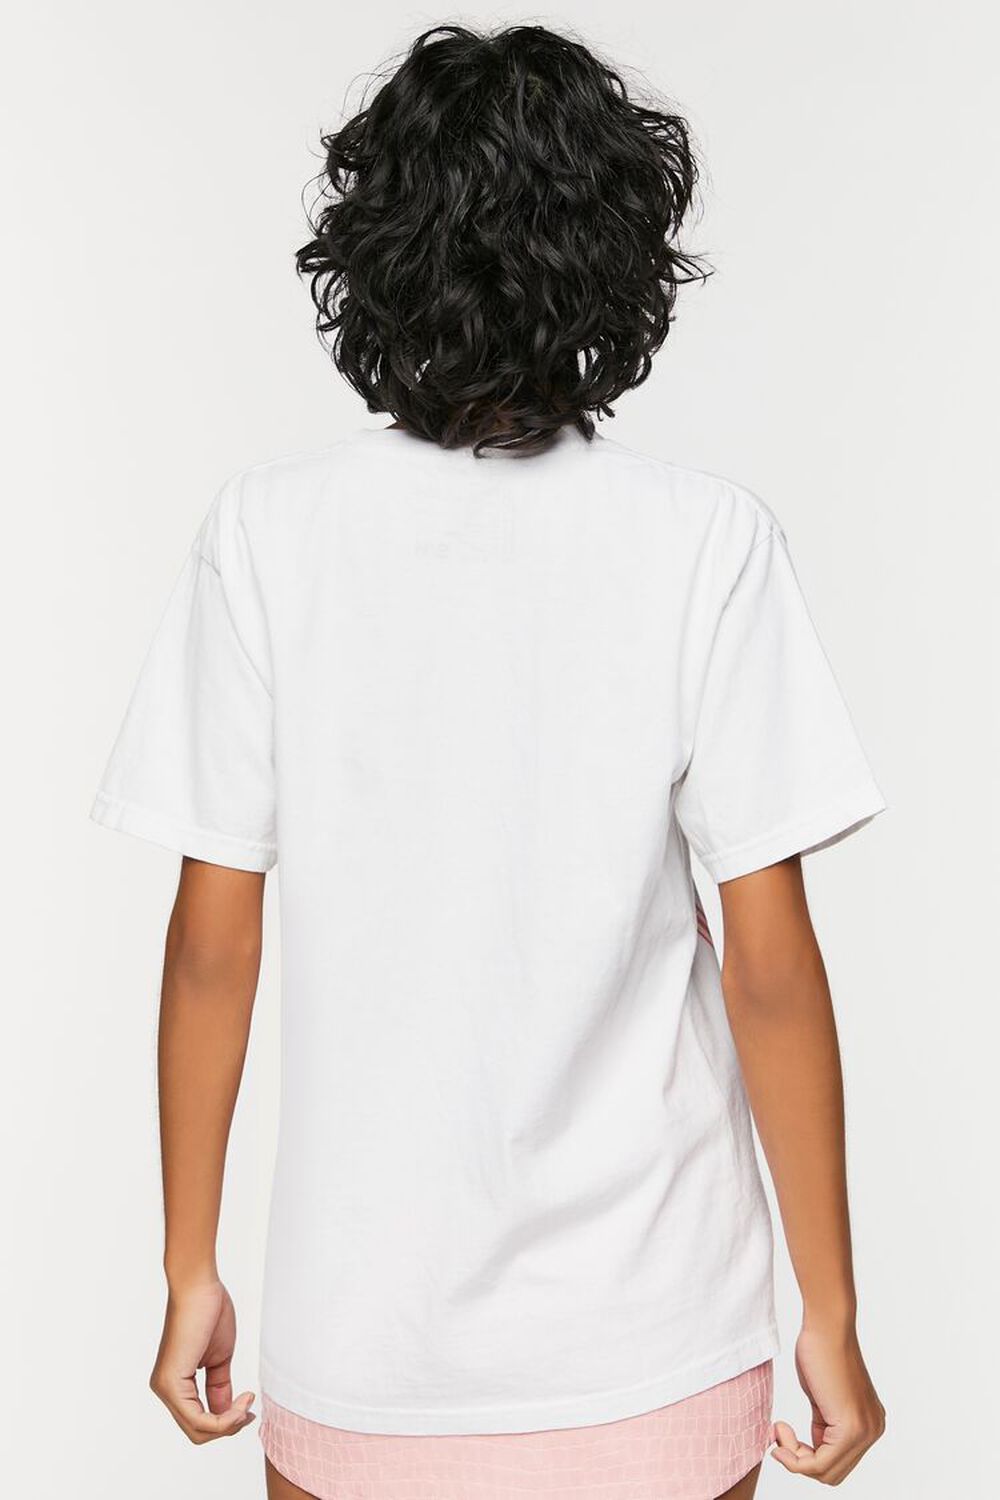 Men's Fleetwood Mac Short Sleeve Graphic T-Shirt - White S